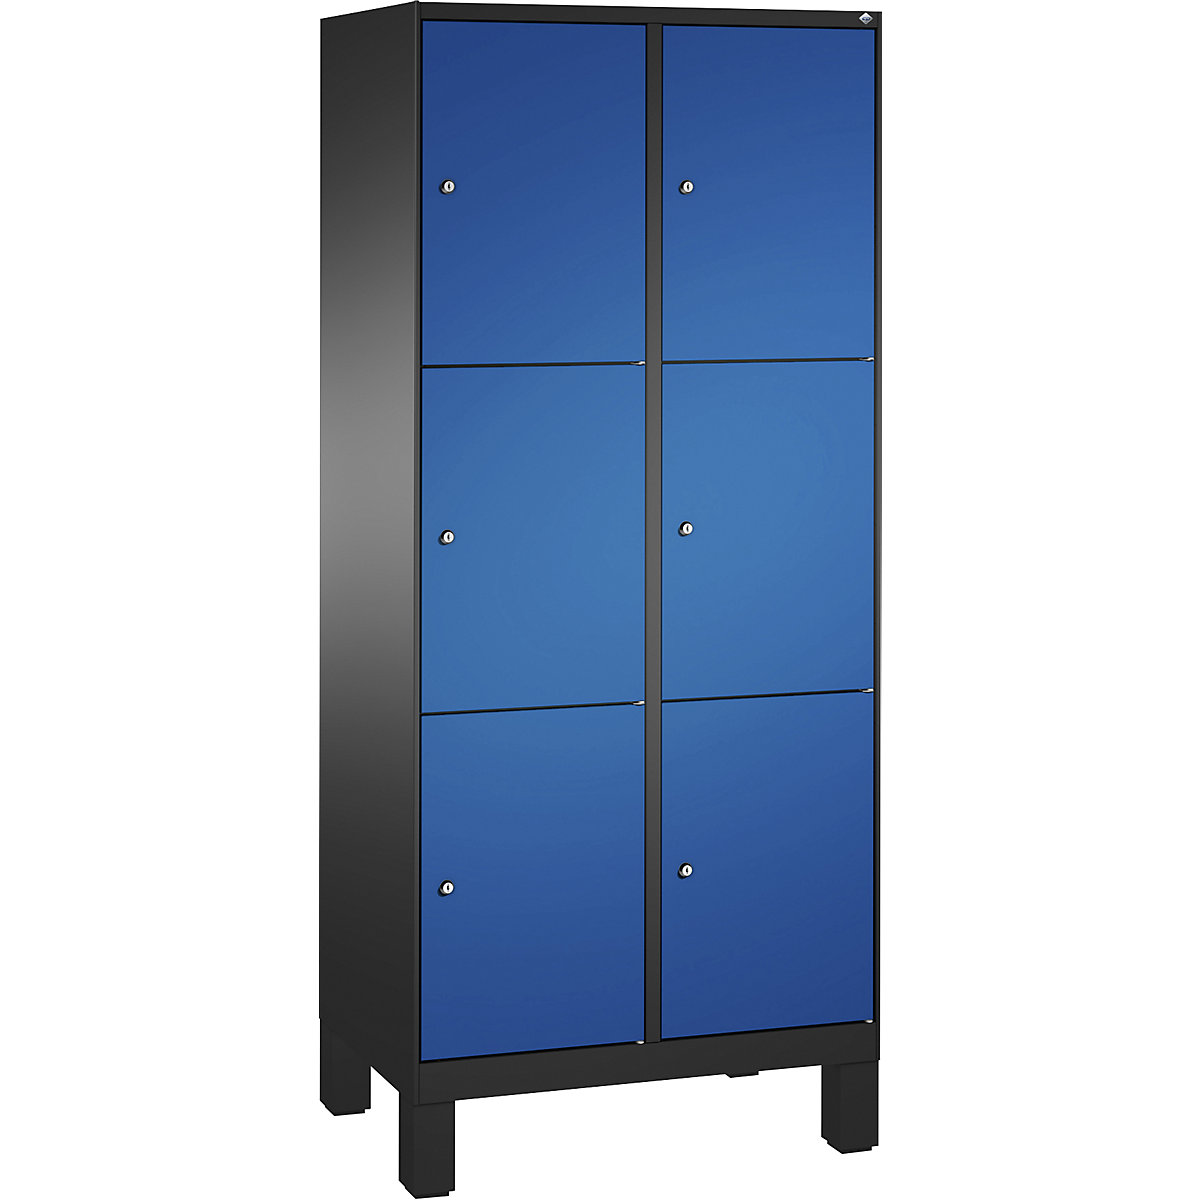 EVOLO locker unit, with feet – C+P, 2 compartments, 3 shelf compartments each, compartment width 400 mm, black grey / gentian blue